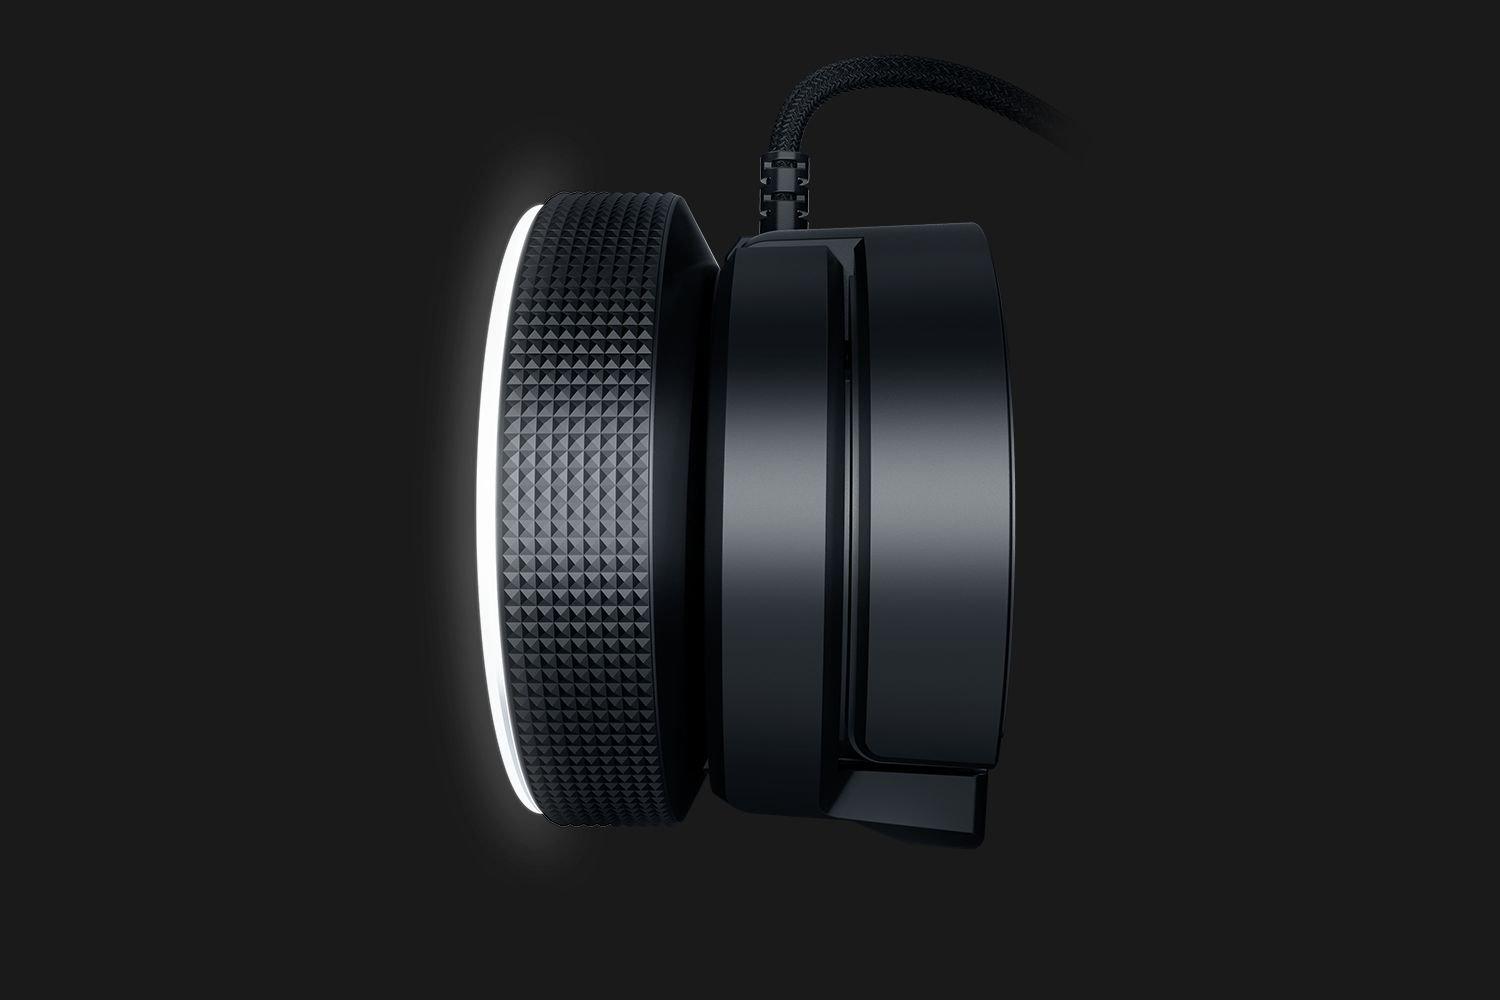 Razer Kiyo Ring Light Equipped Web Camera